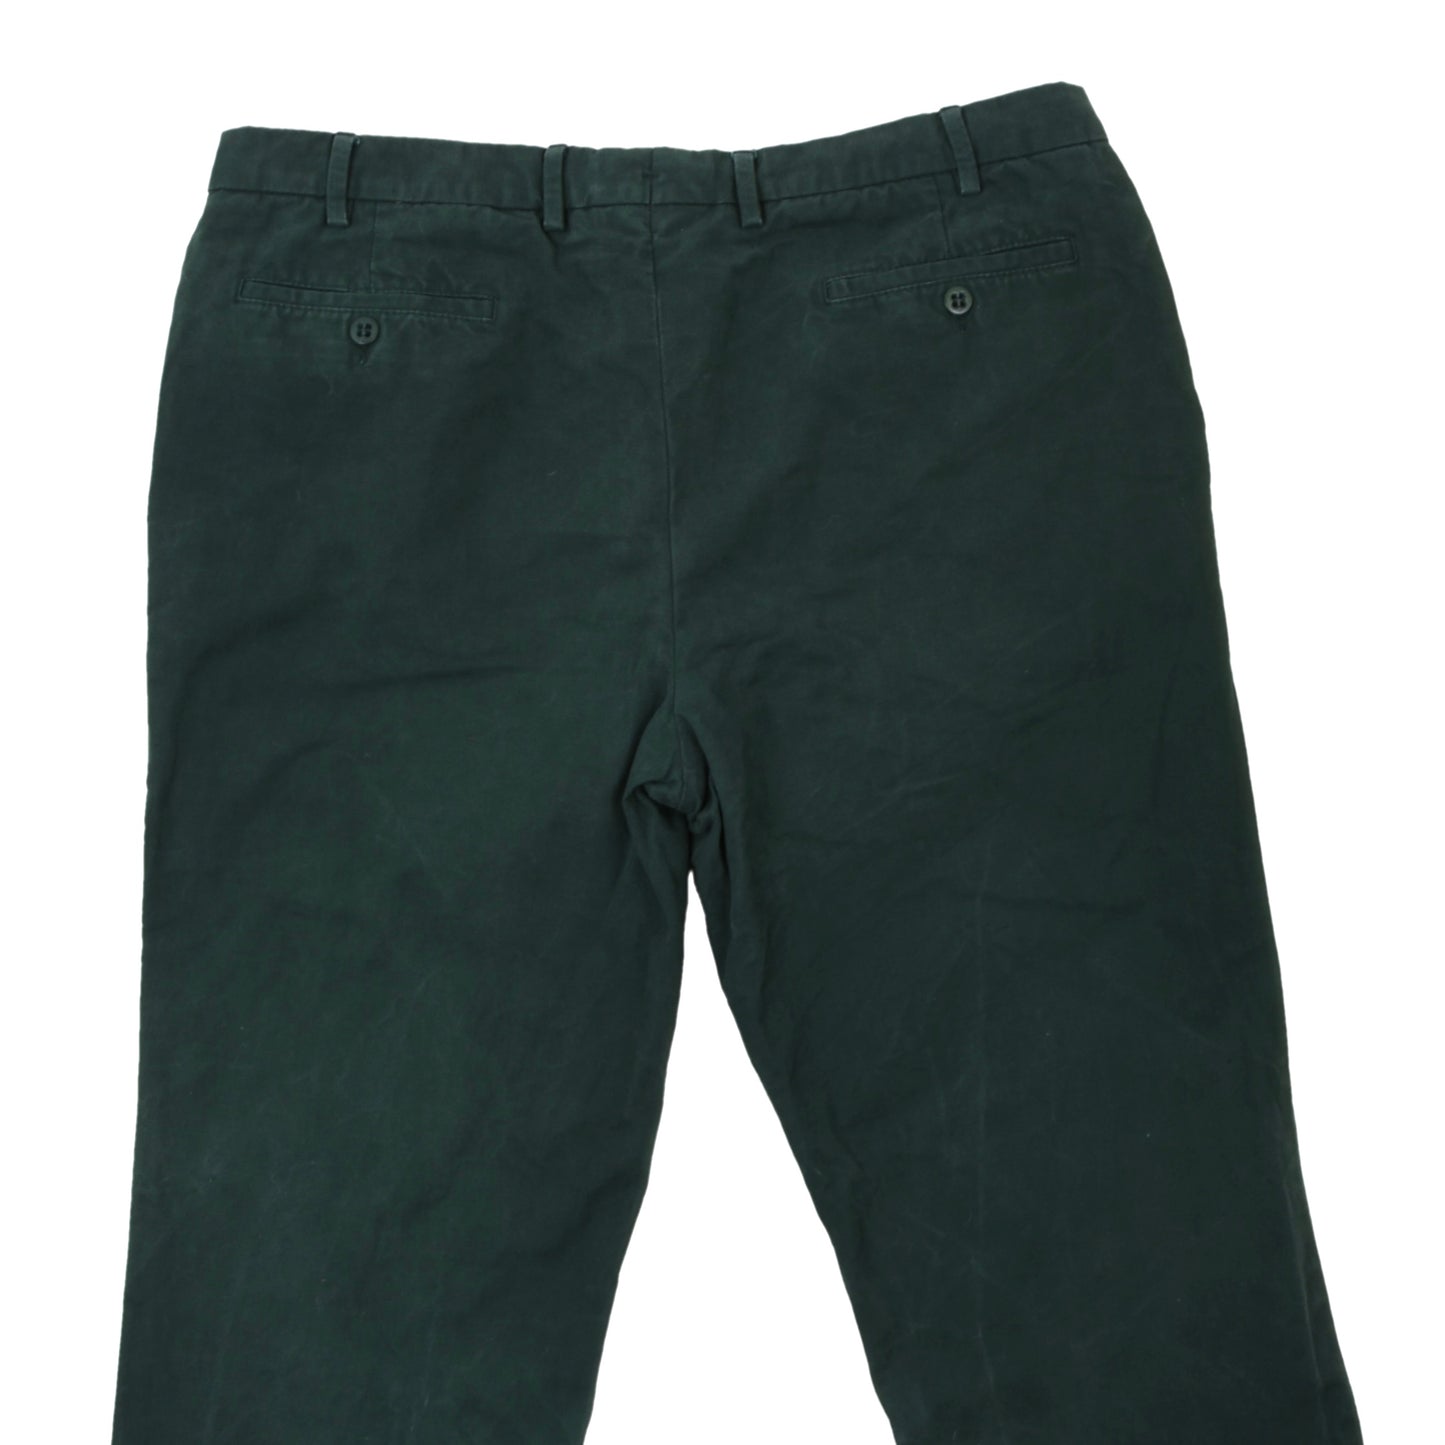 Raffaele Caruso Cotton Pants Size 56 - Bottle Green